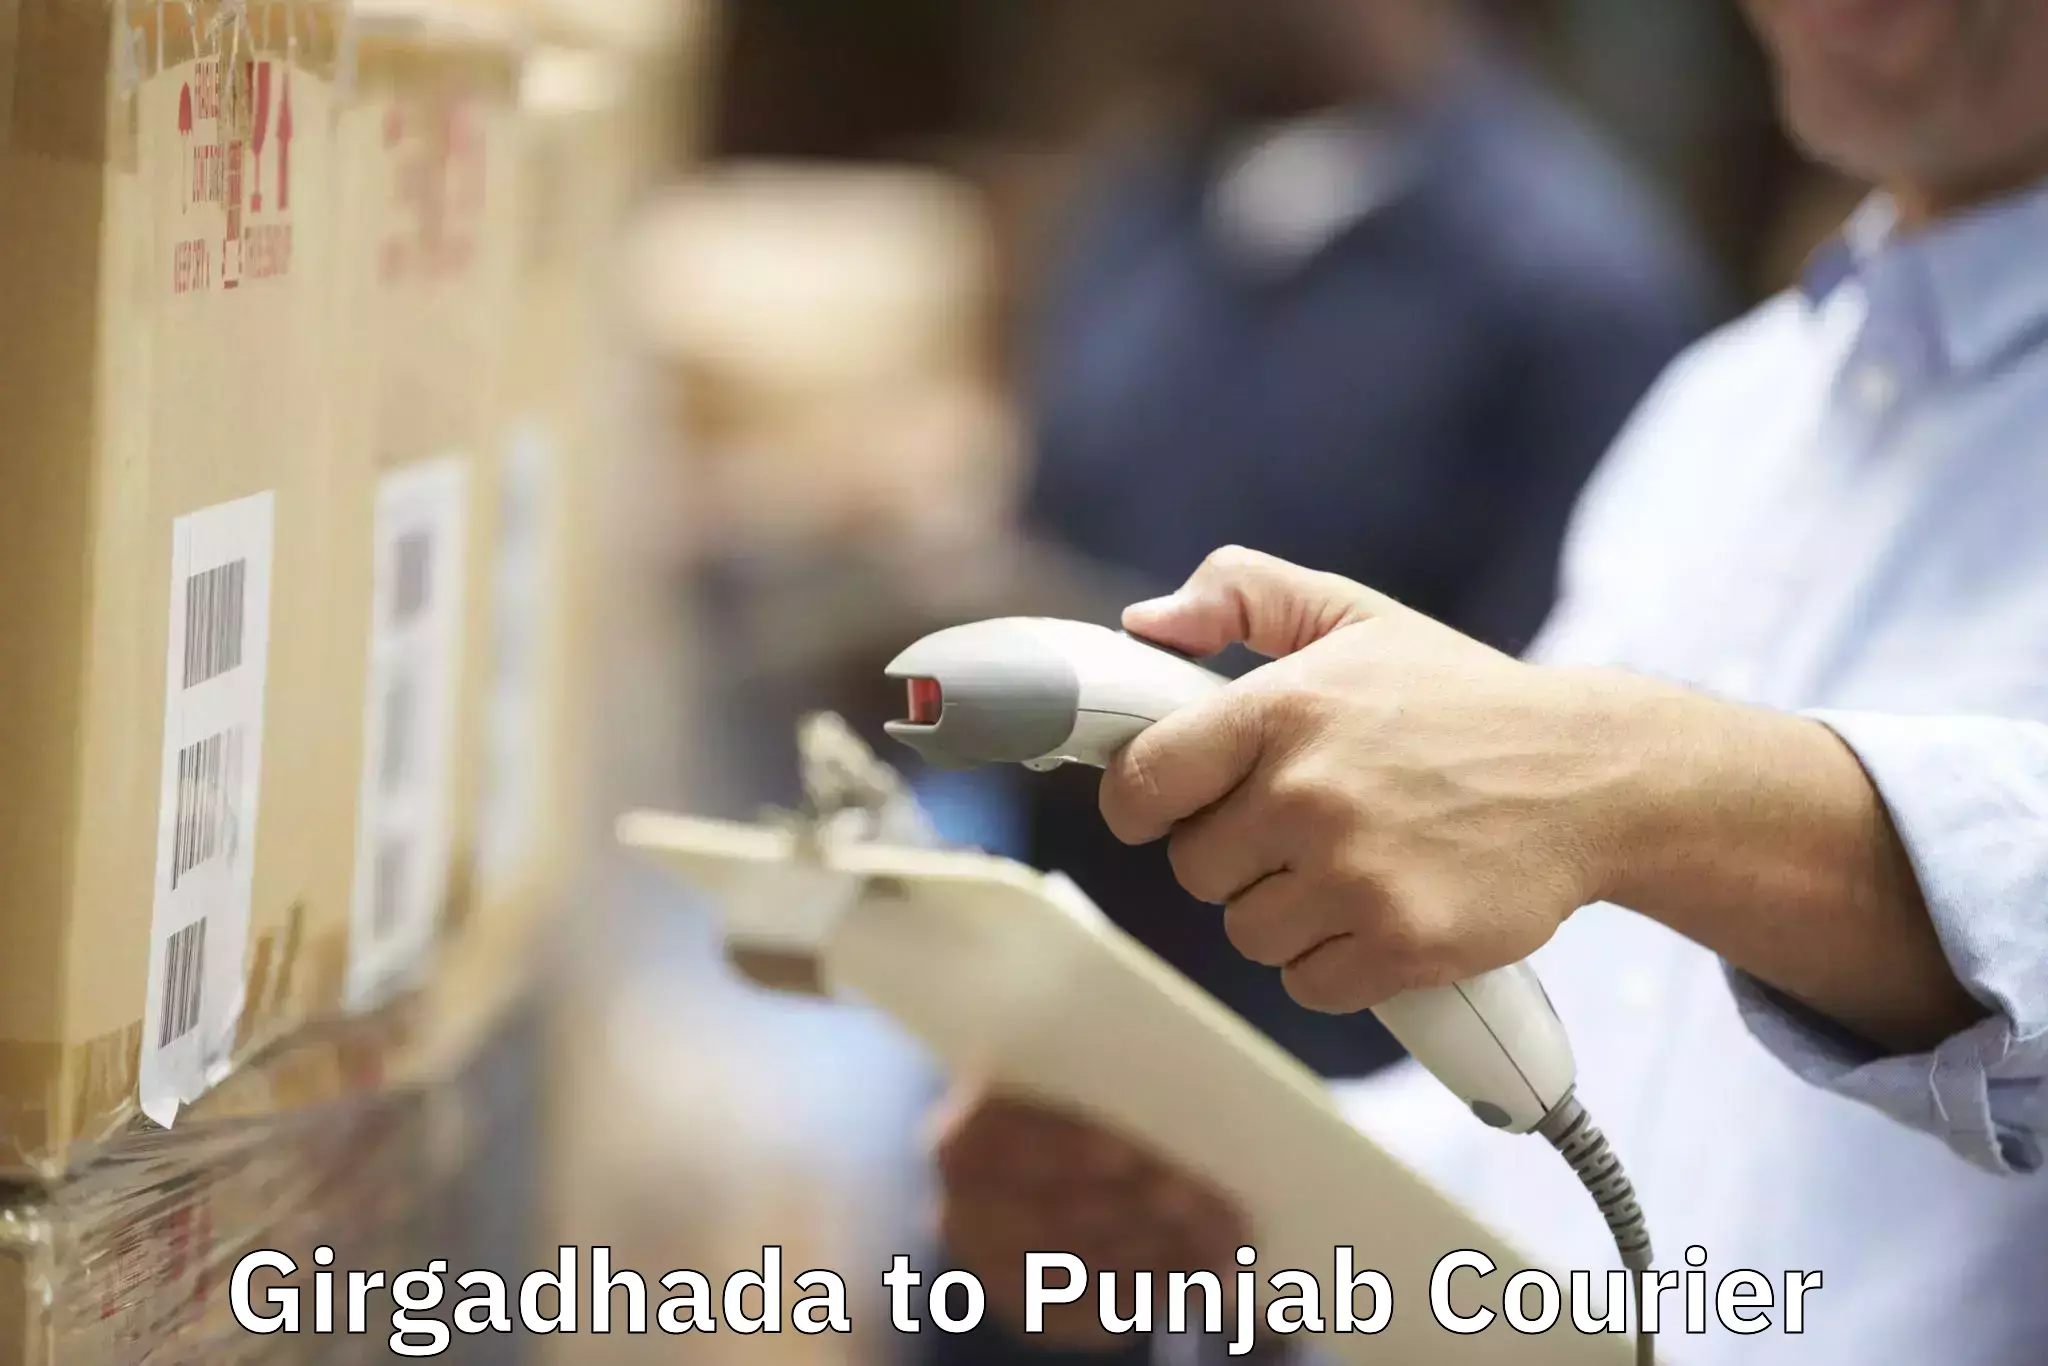 Full-service relocation in Girgadhada to Punjab